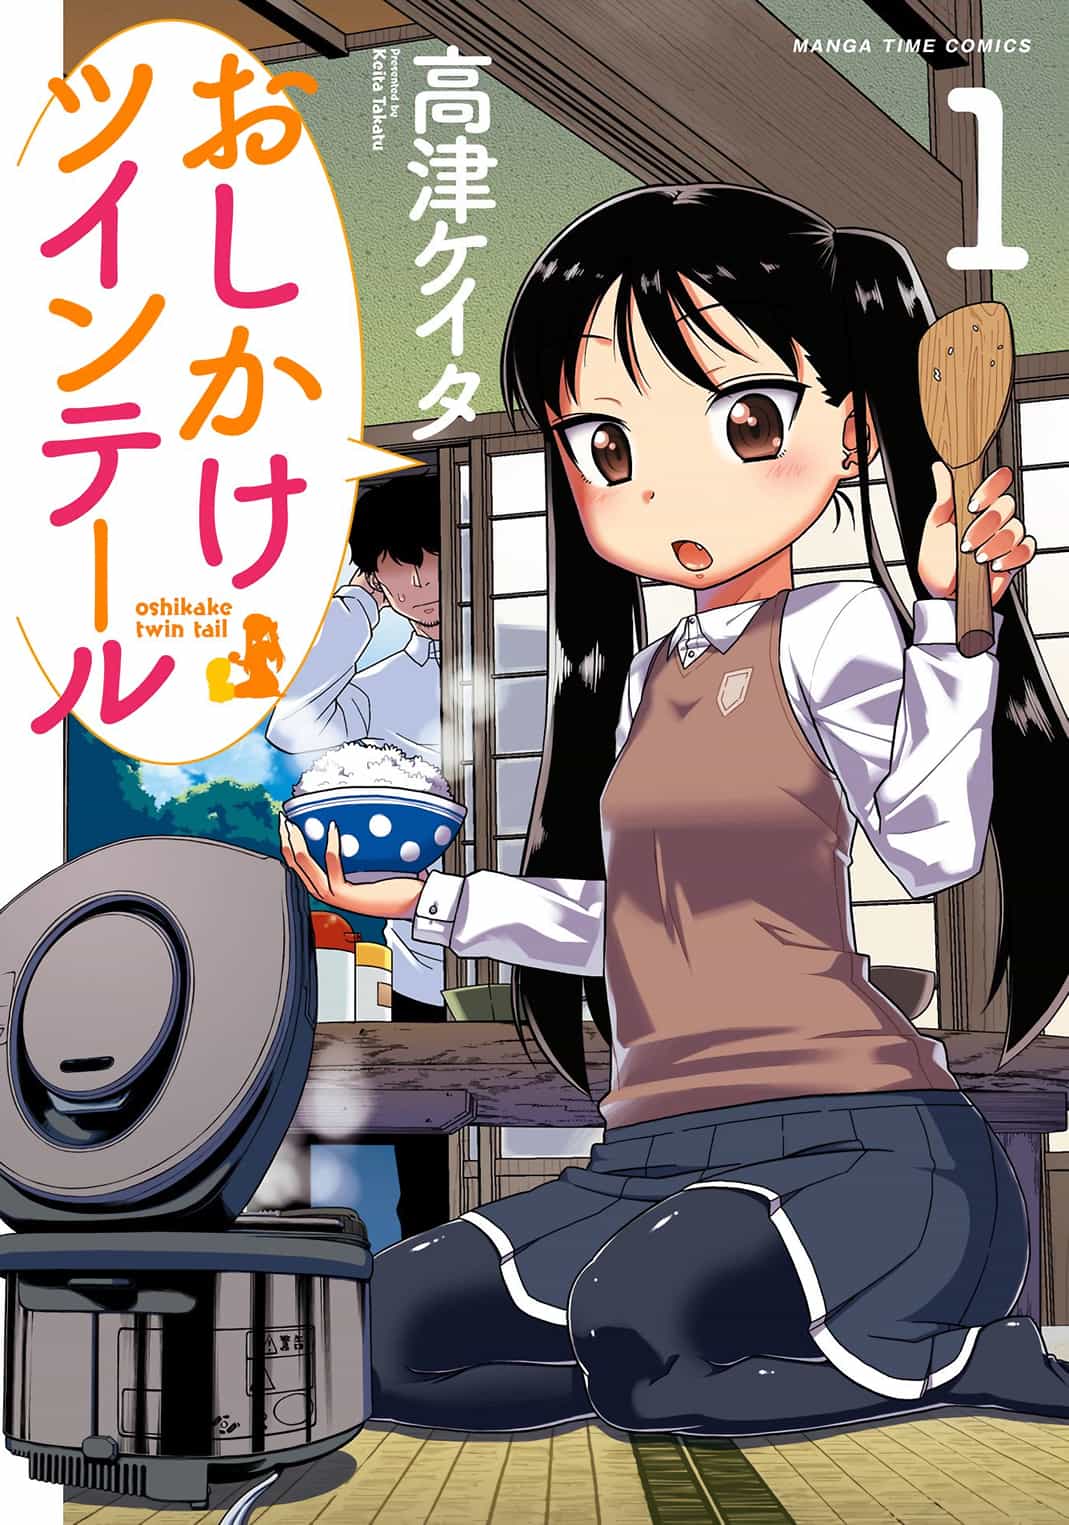 Oshikake Twin Tail Manga